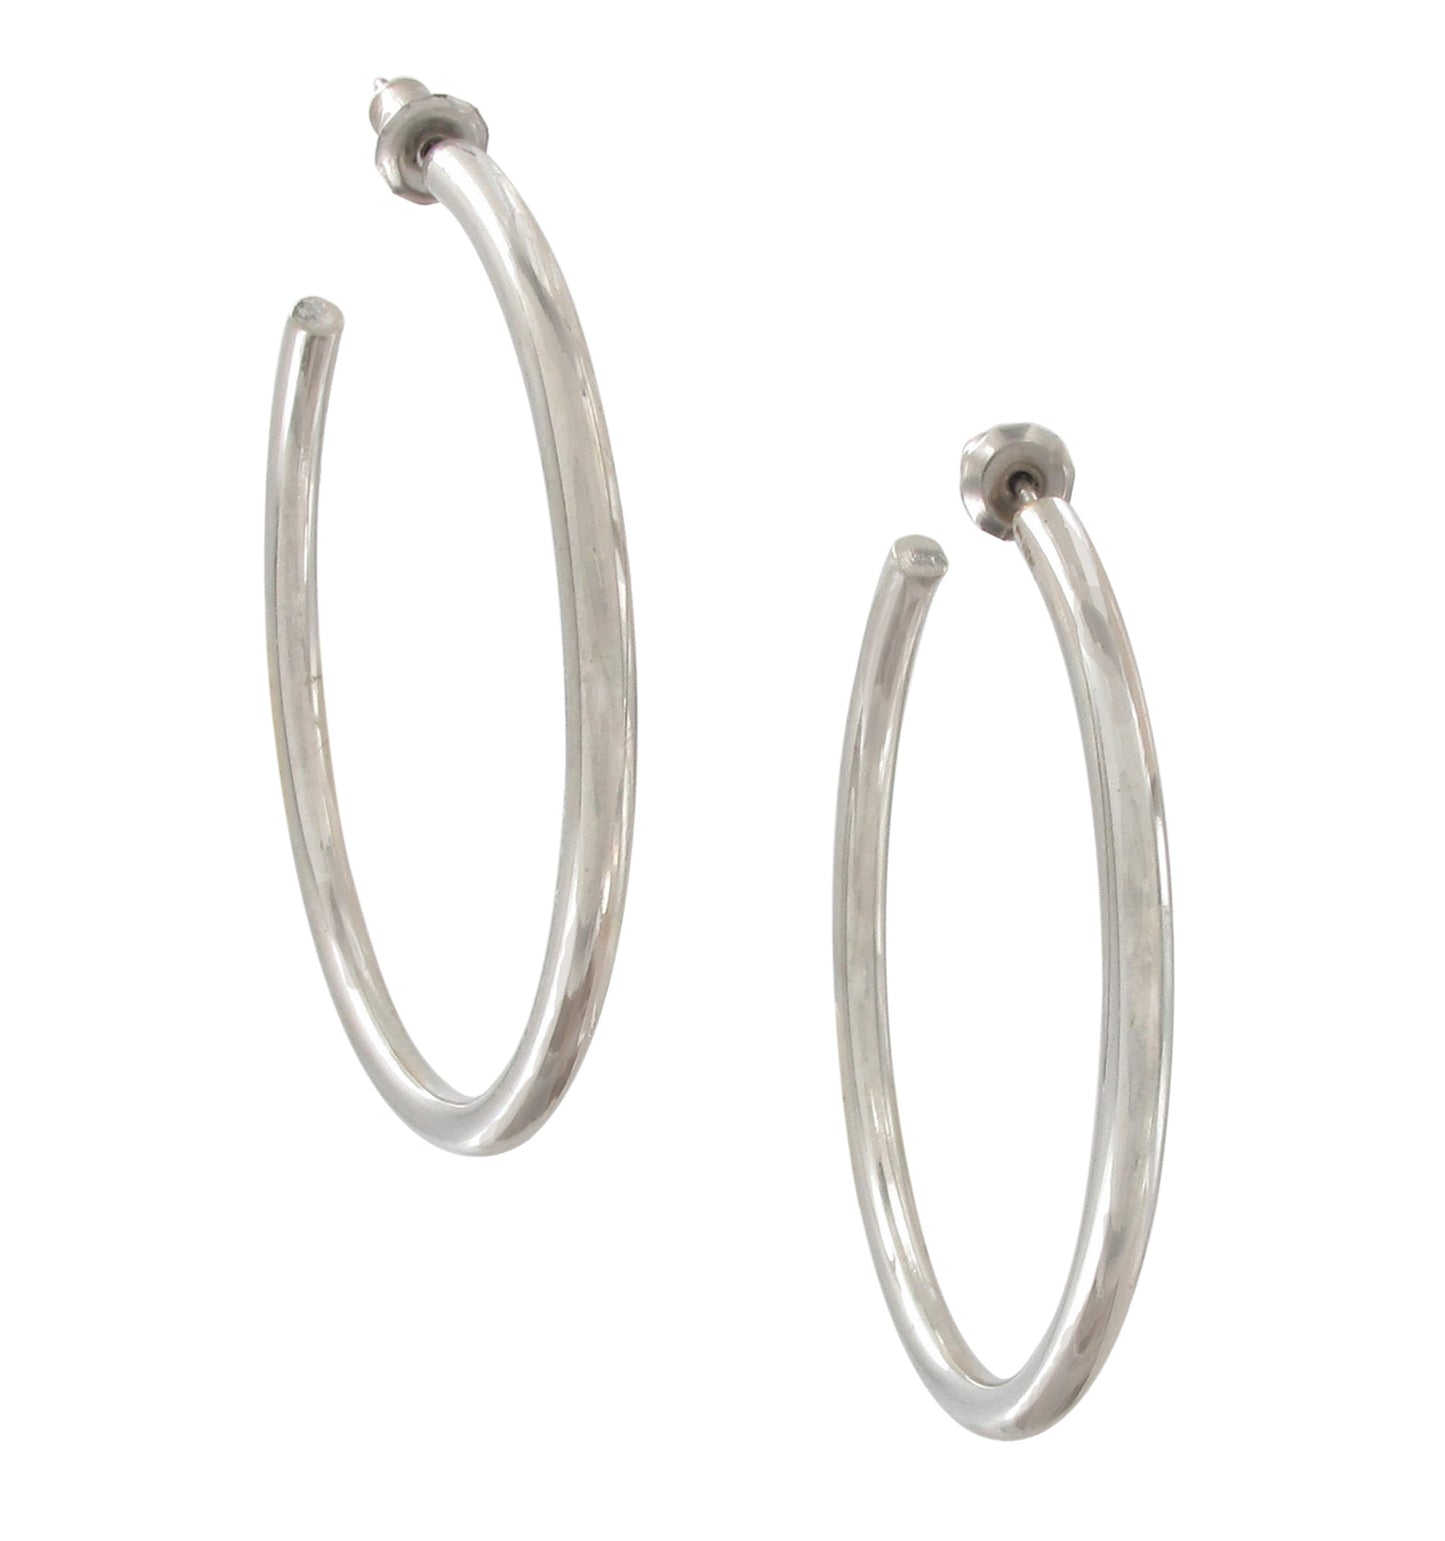 Classic Thin Plain Wire Silver Tone Round Hoop Earrings Pierced 1 5/8"